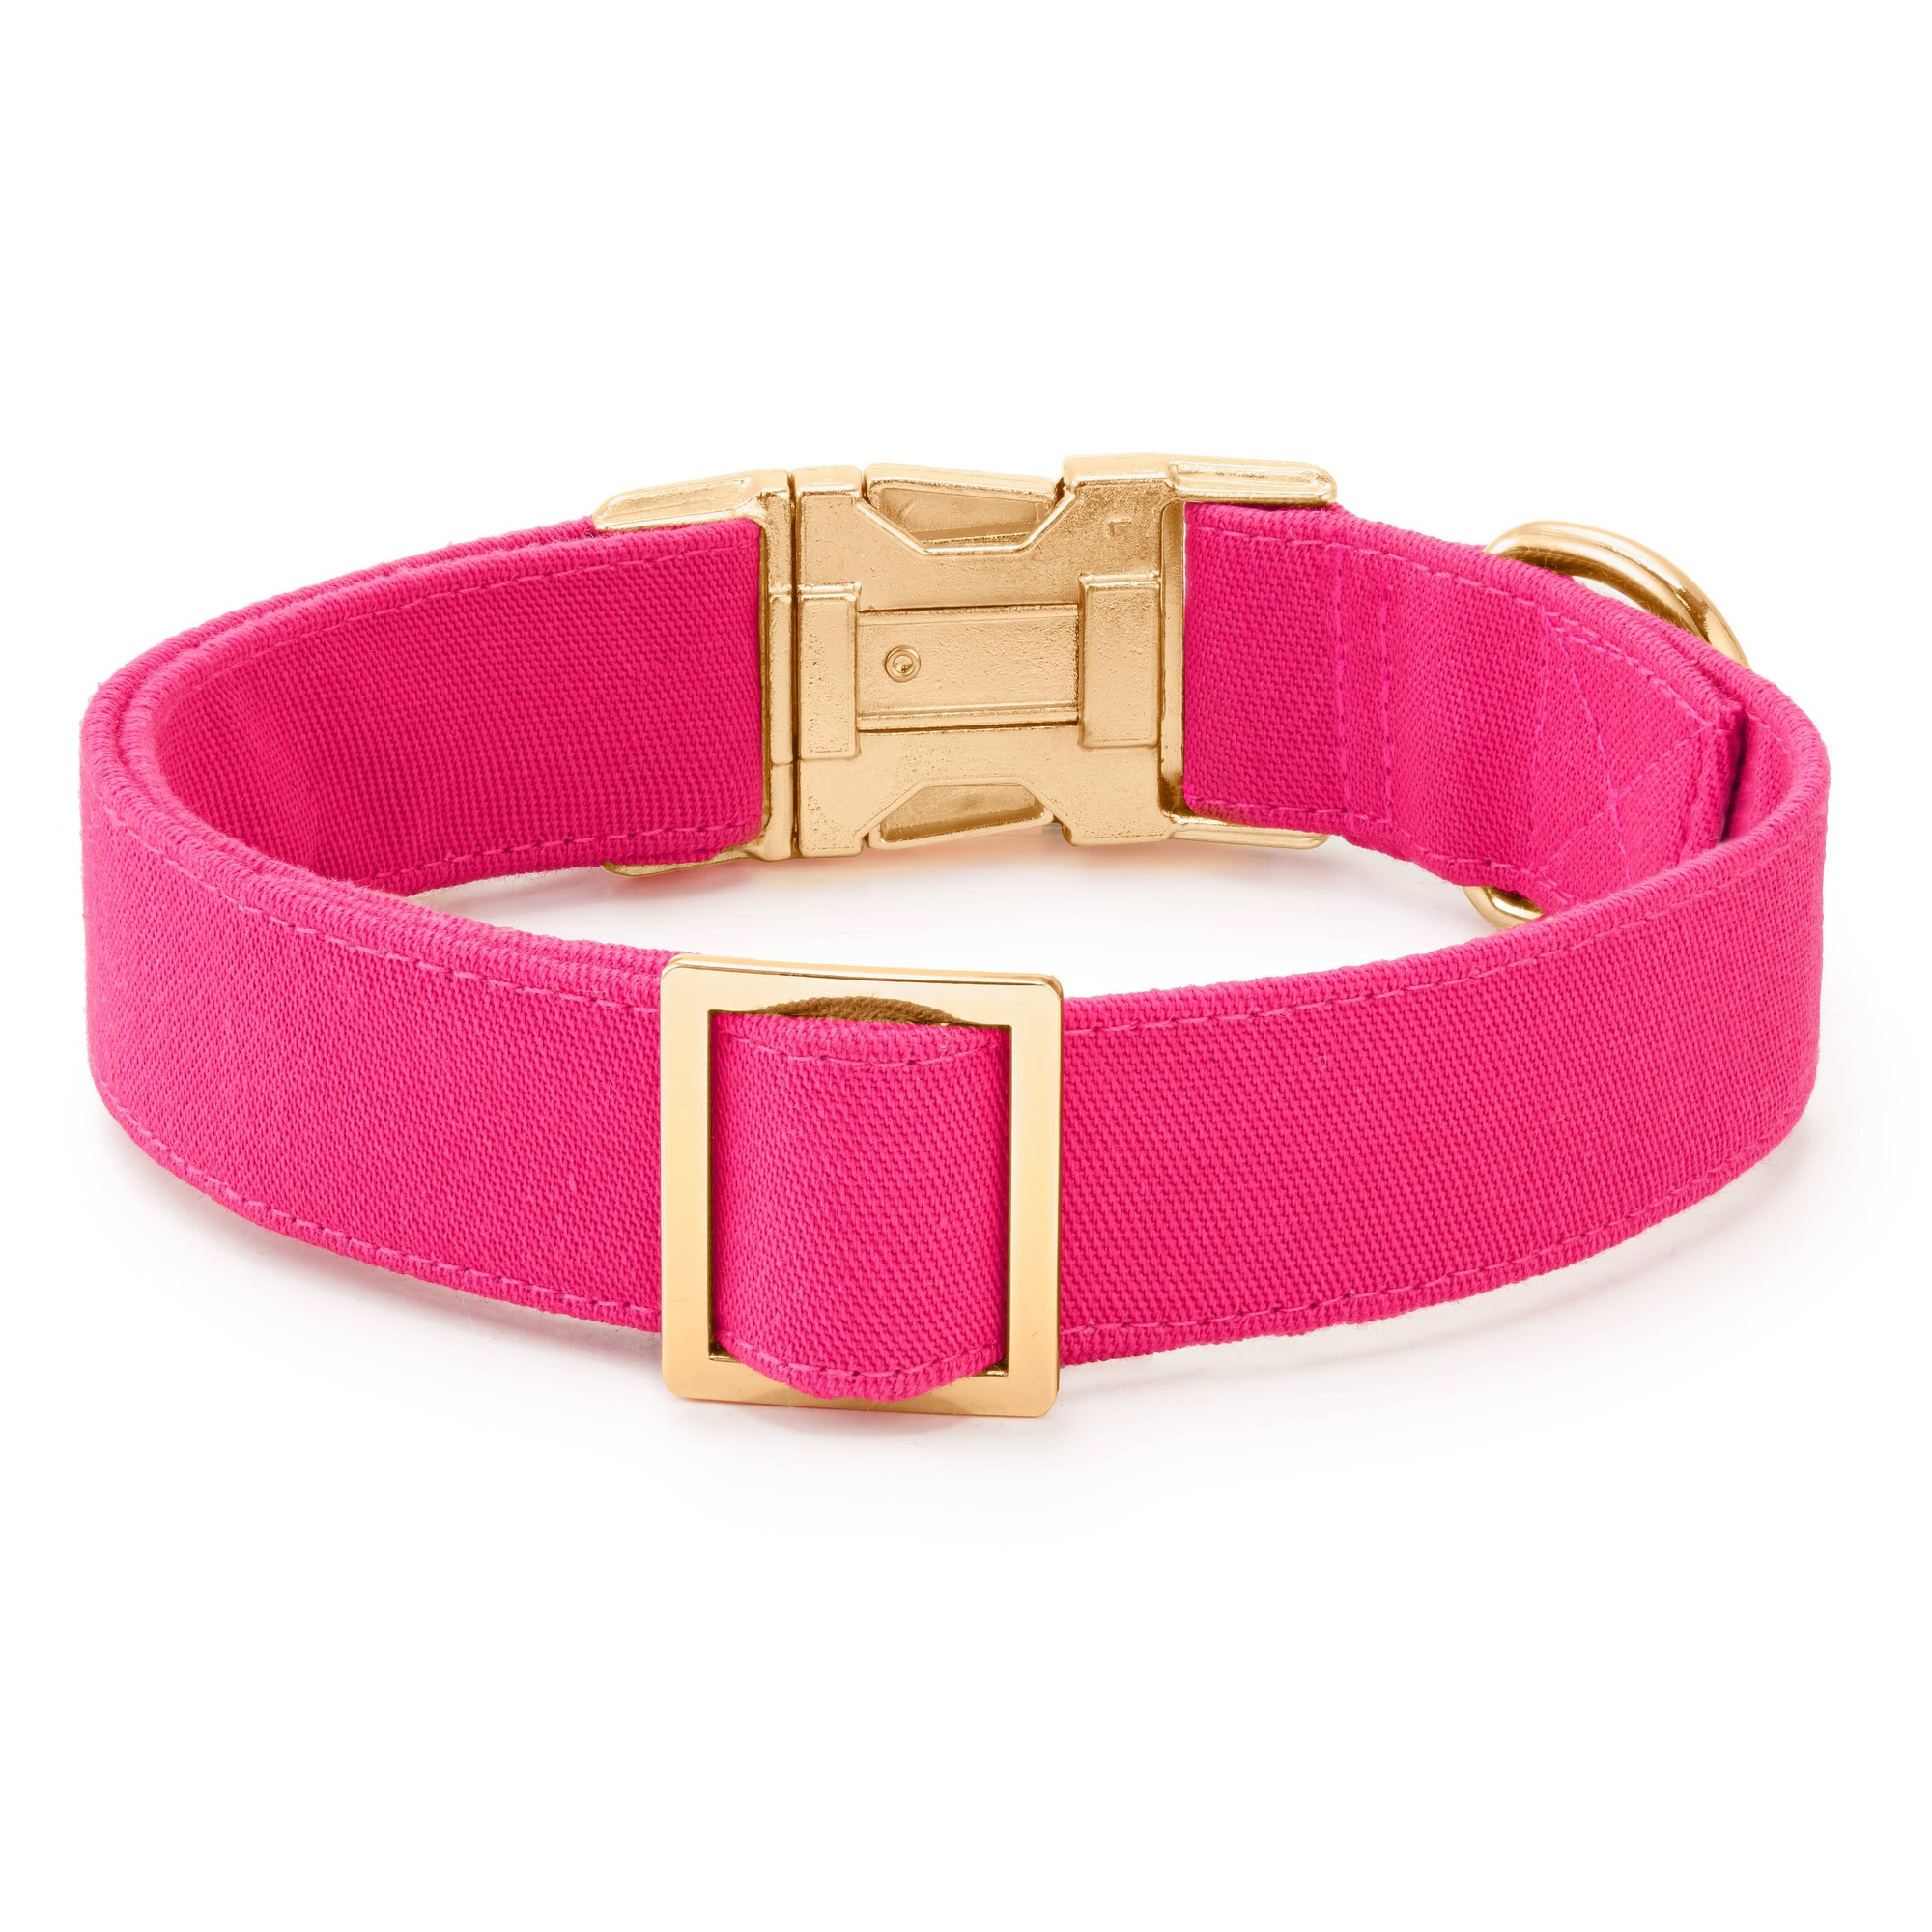 Hot Pink Dog Collar: S / Gold